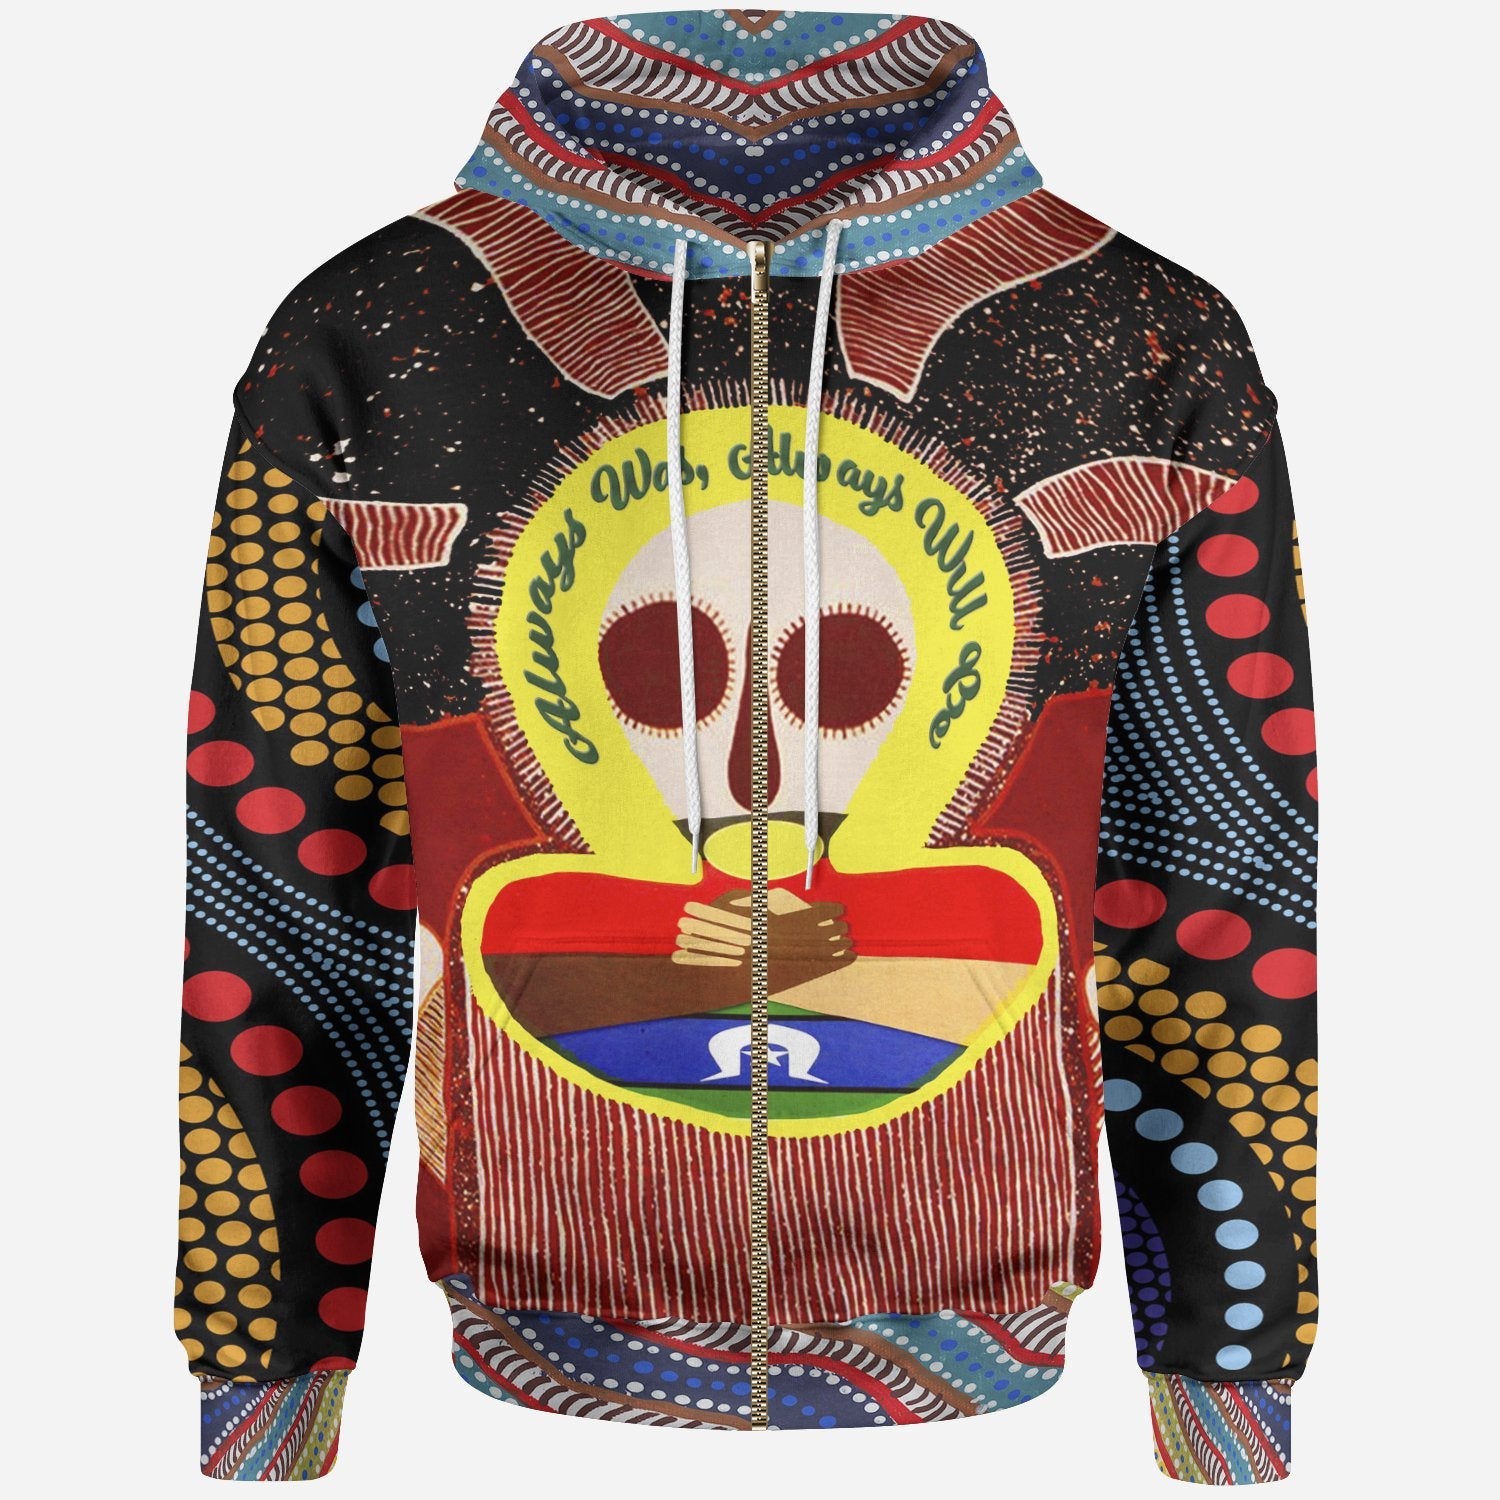 aboriginal-and-torres-strait-islander-zip-up-hoodie-naidoc-style